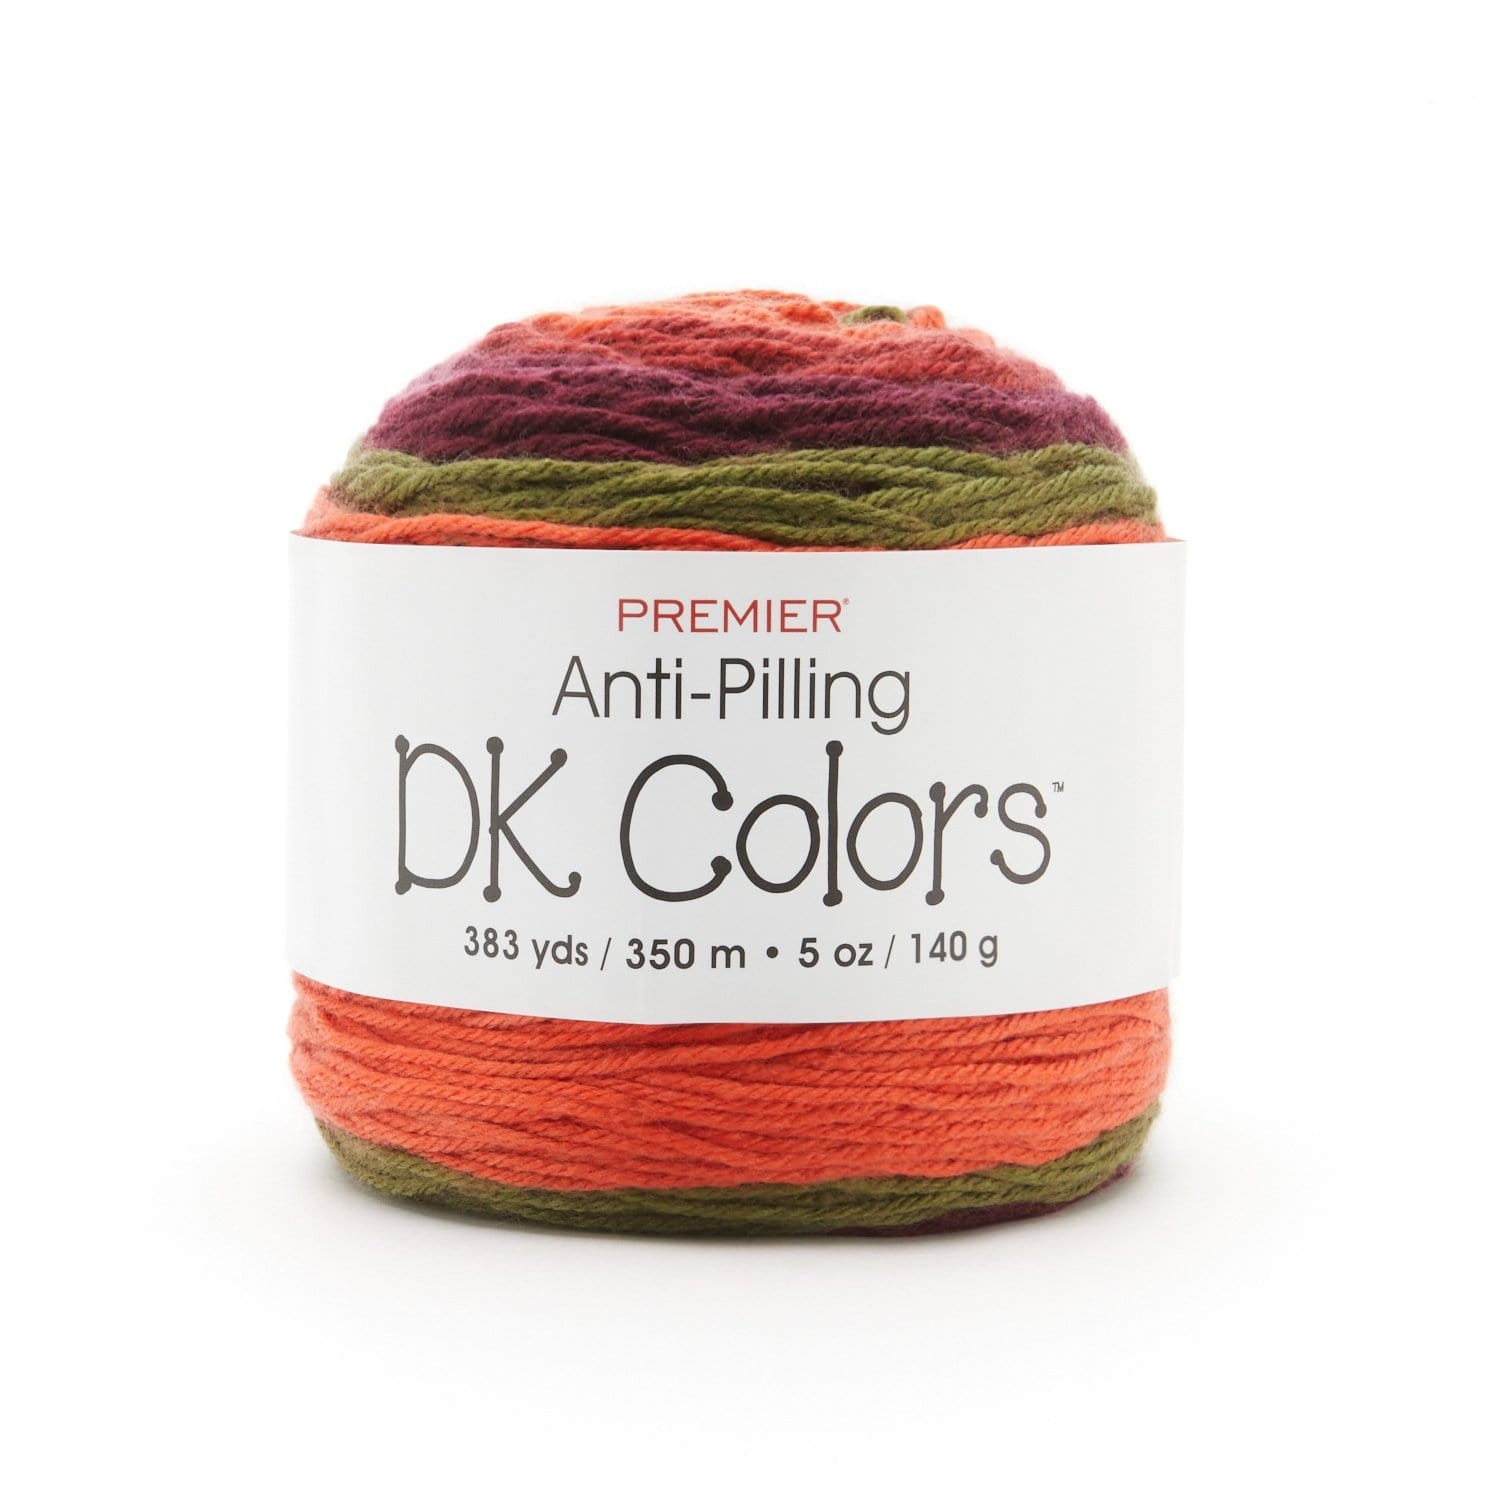 Premier Anti-pilling DK Colors Self-striping Yarn, Acrylic, Light